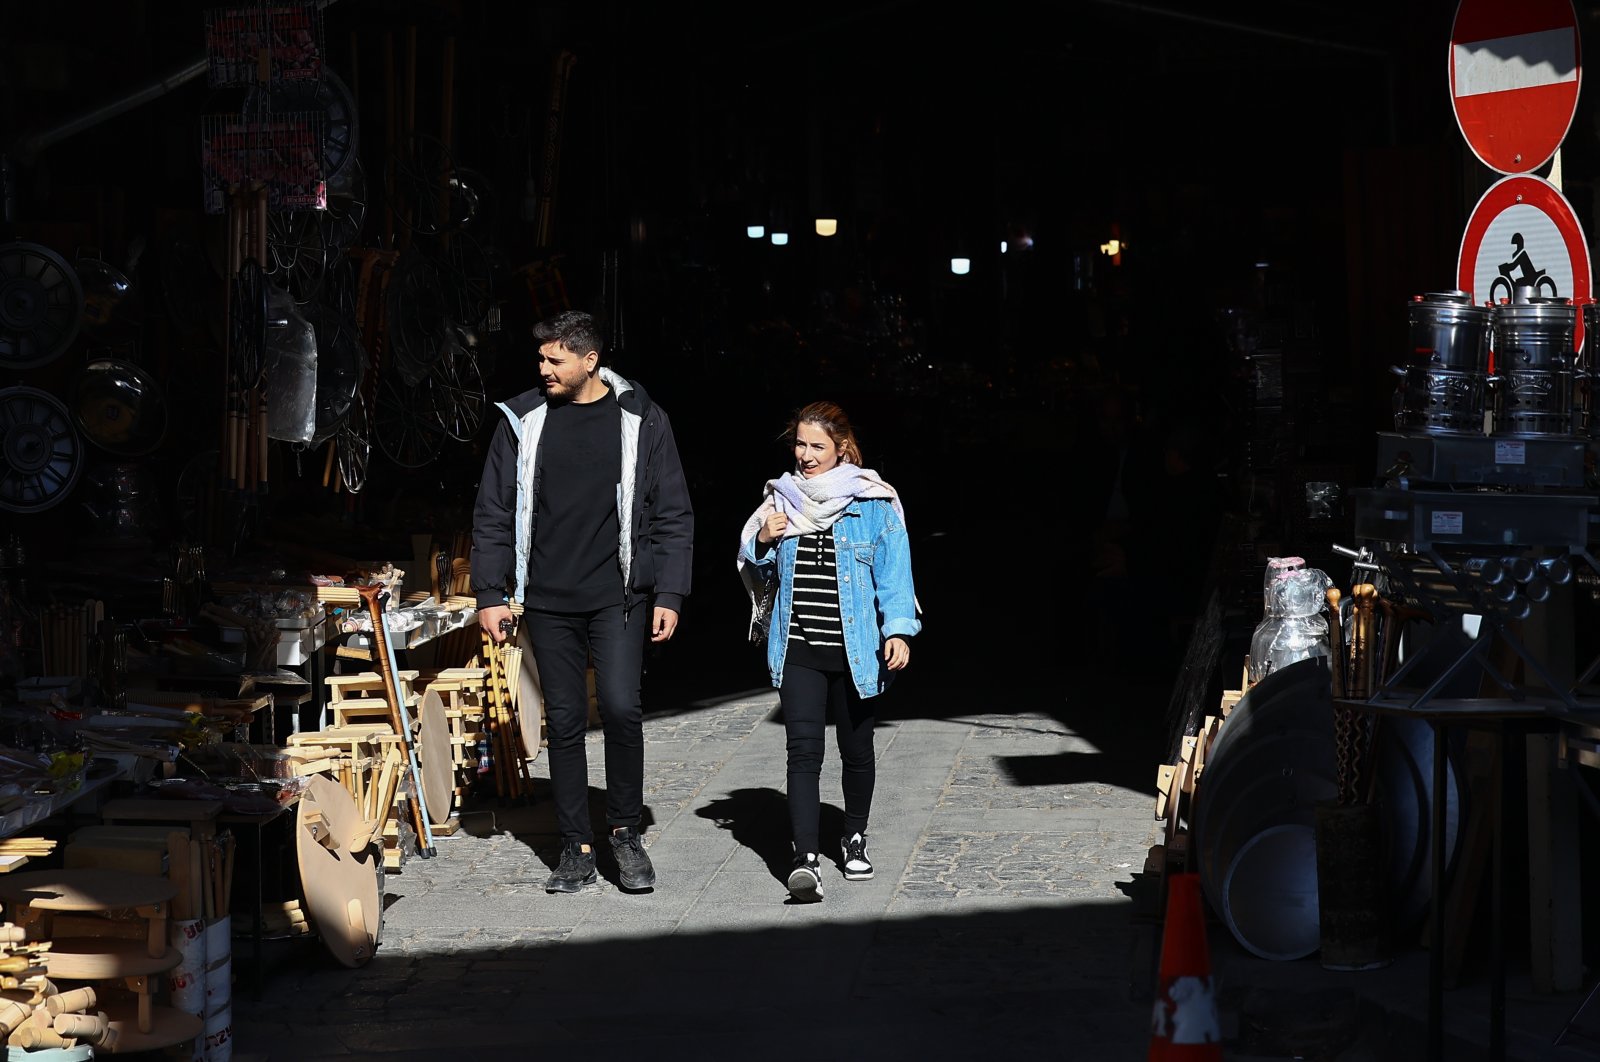 People shop in the old city bazaar following a powerful earthquake, in Gaziantep, Türkiye, March 6, 2023. (EPA Photo)